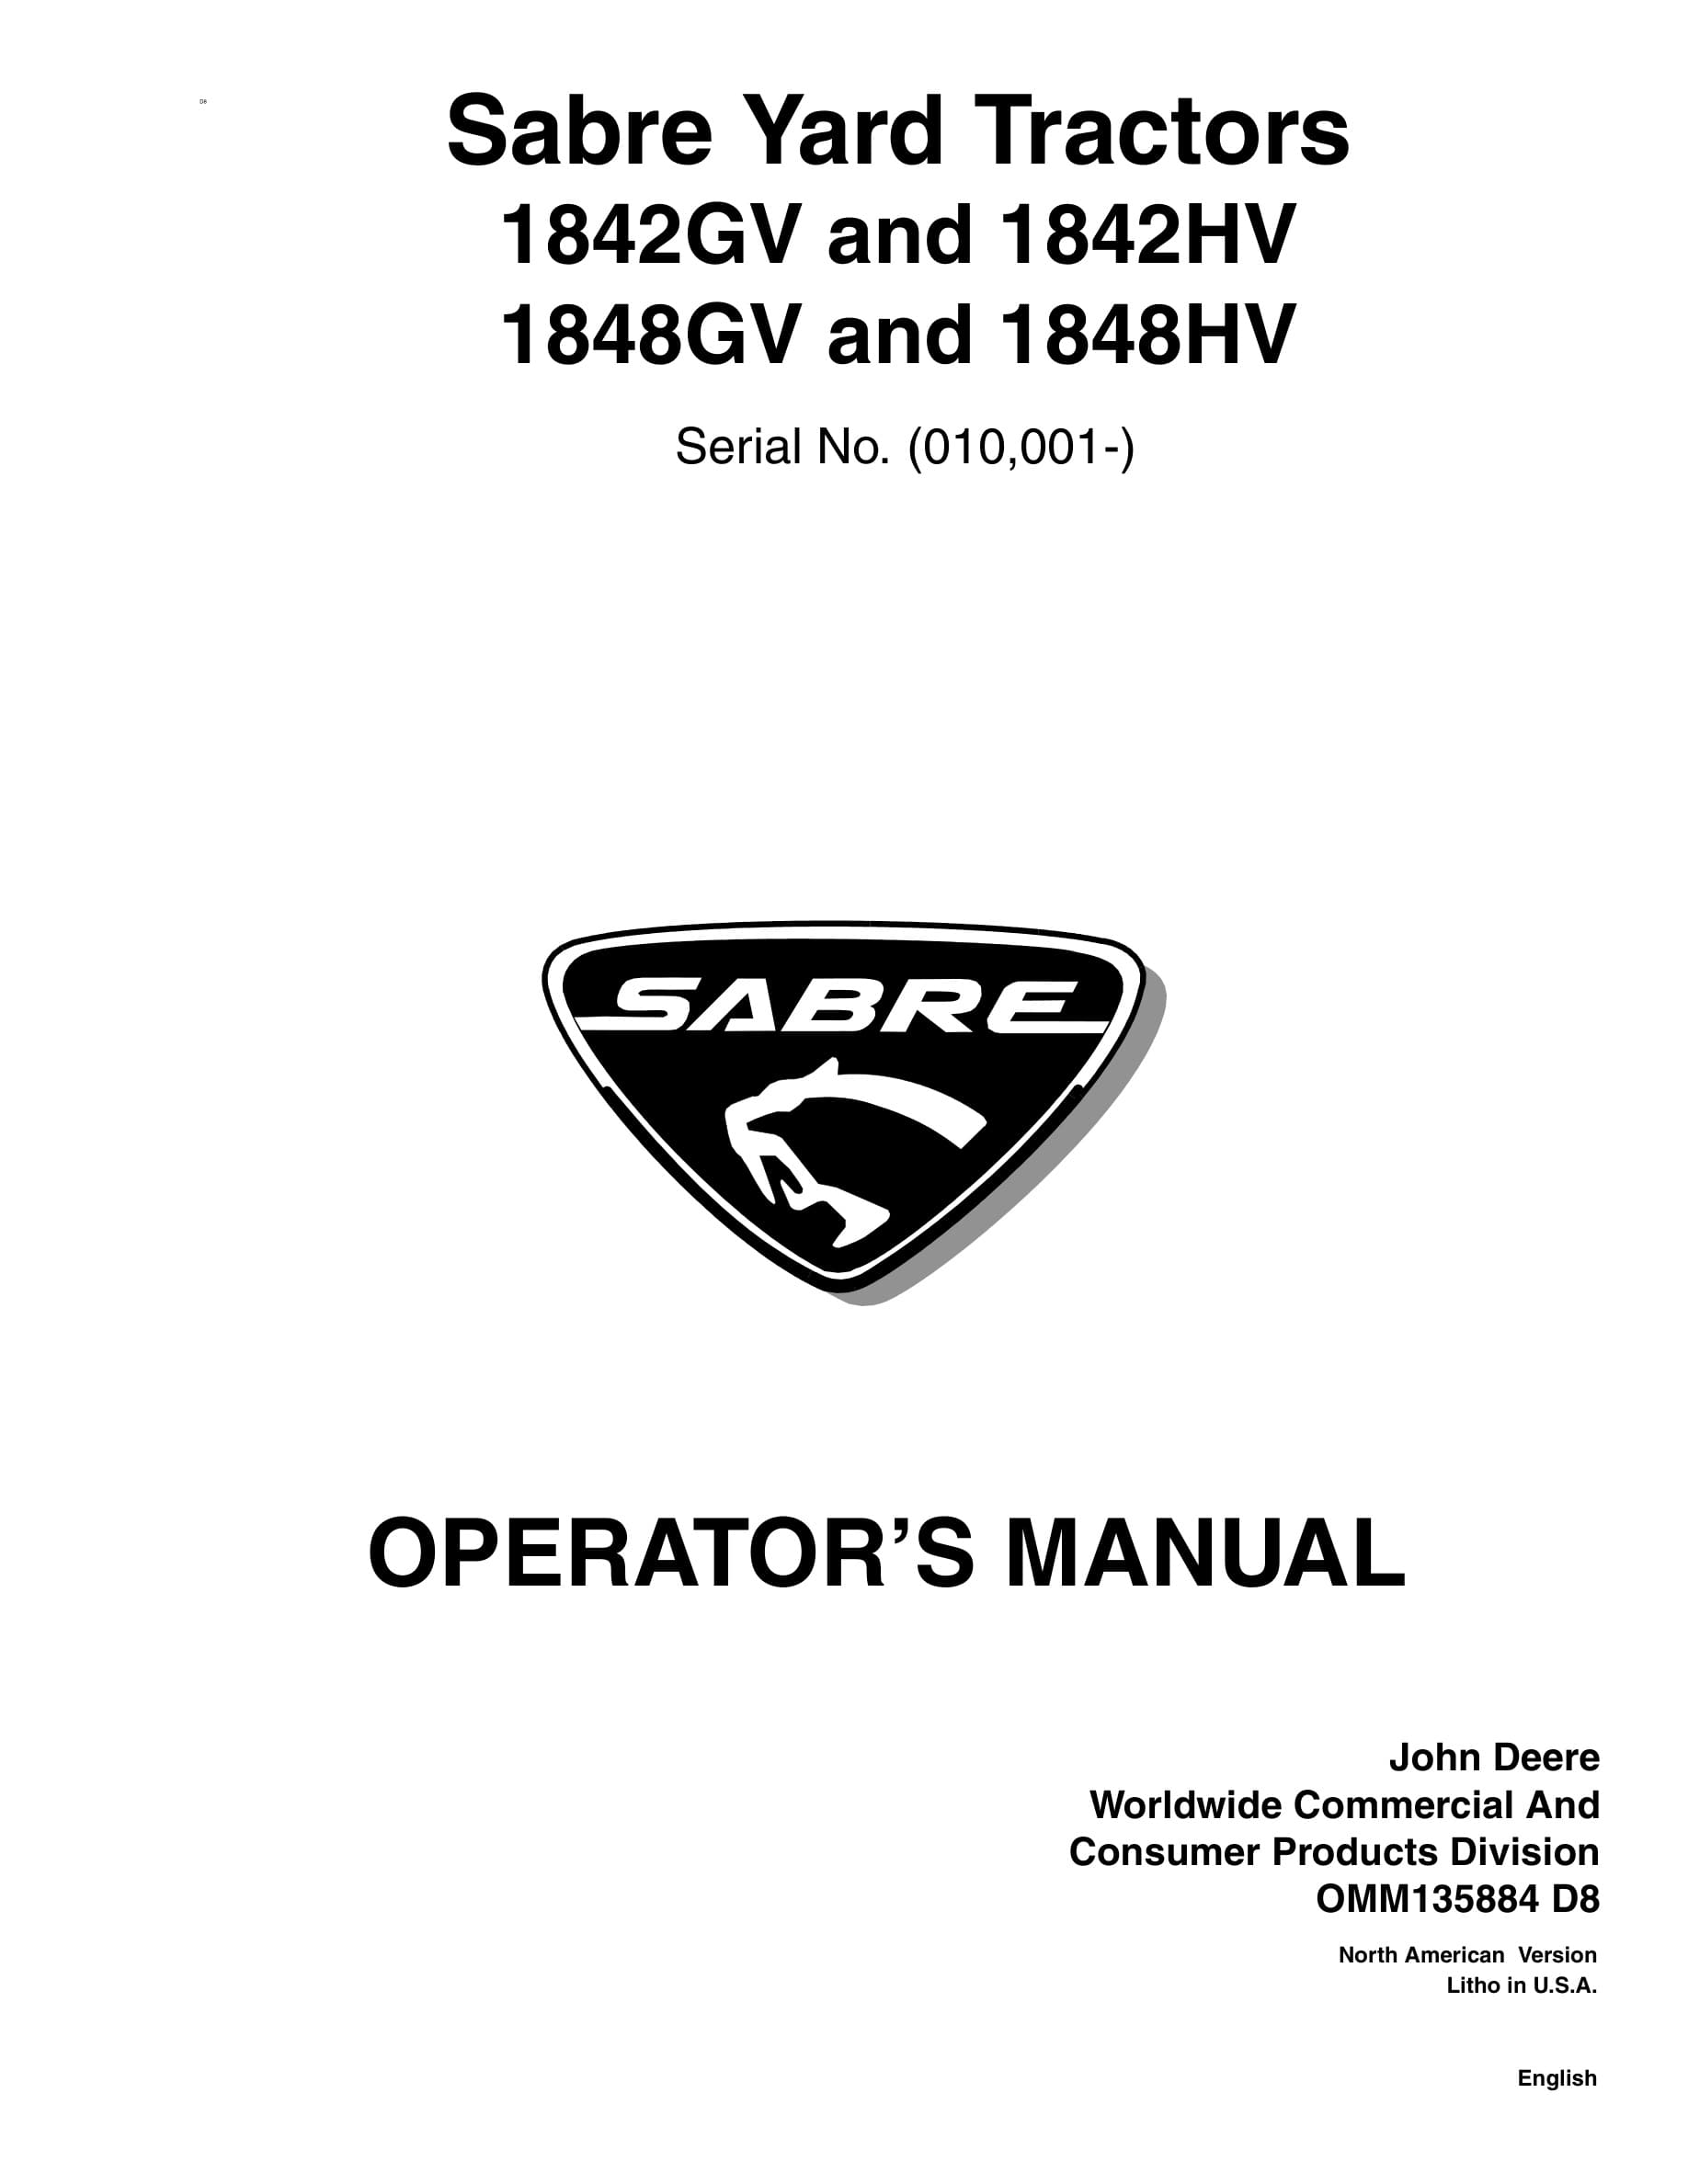 John Deere 1842GV and 1842HV 1848GV and 1848HV Tractor Operator Manual OMM135884-1